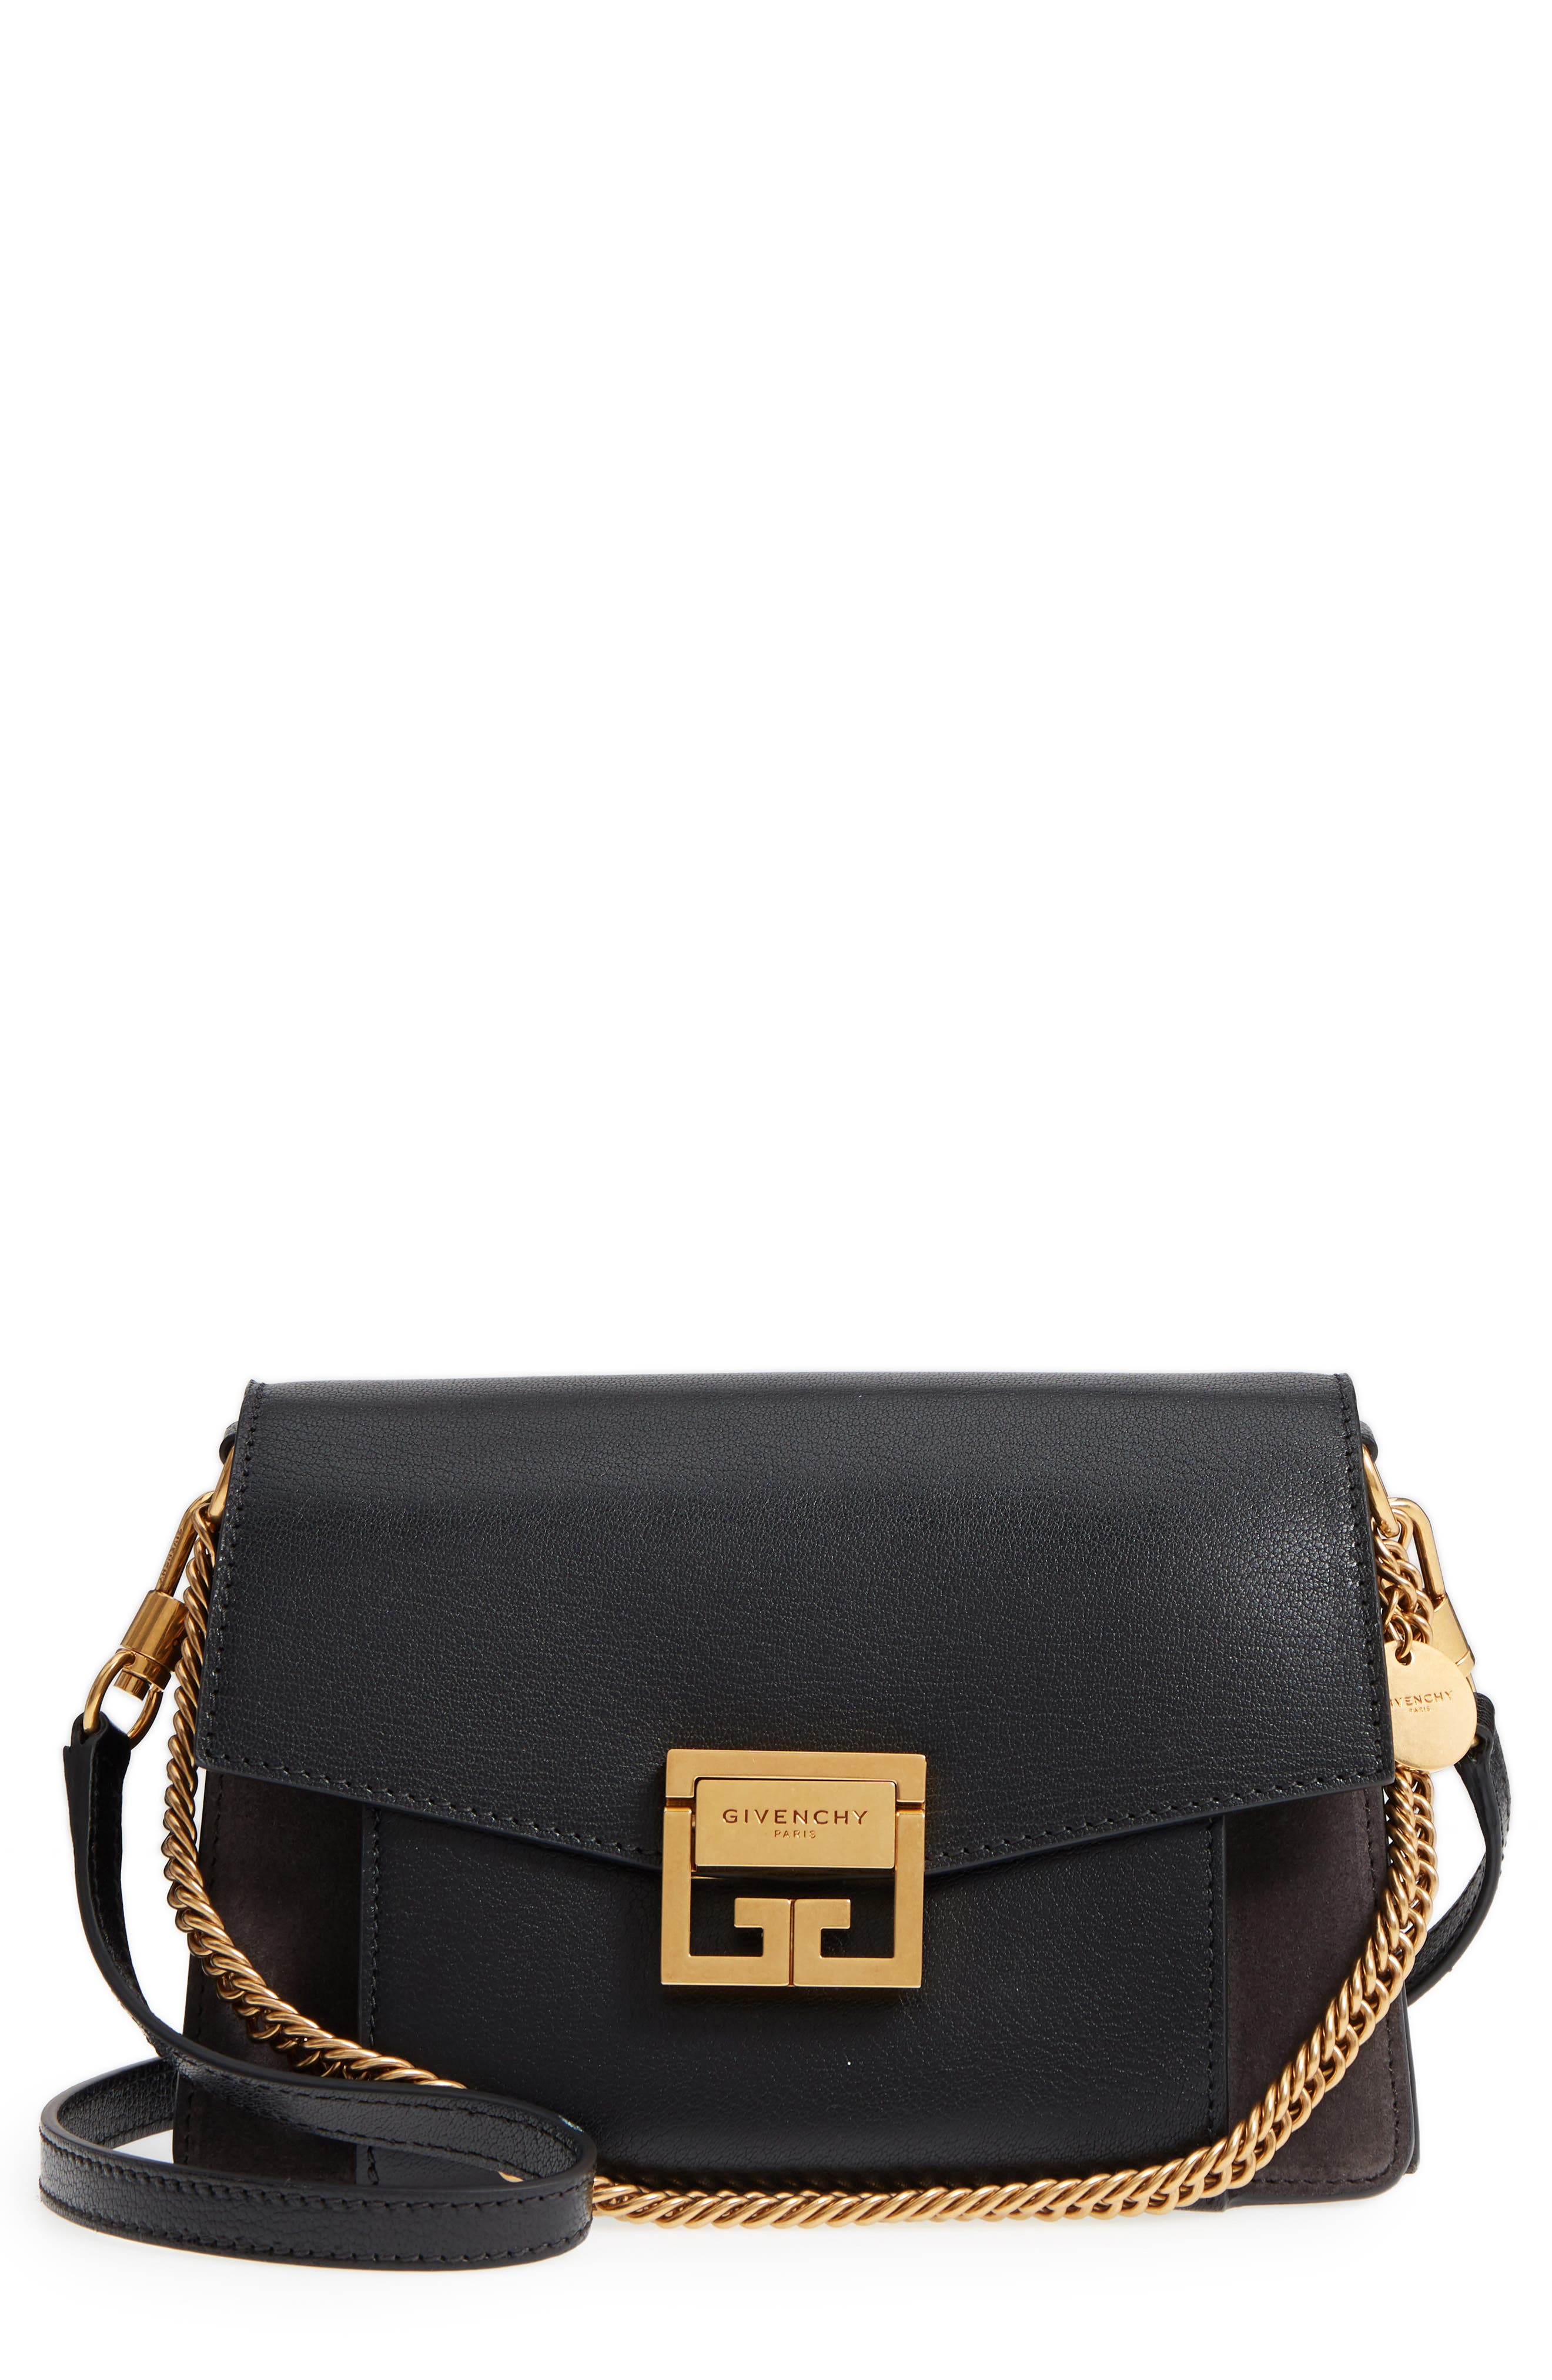 black side purse